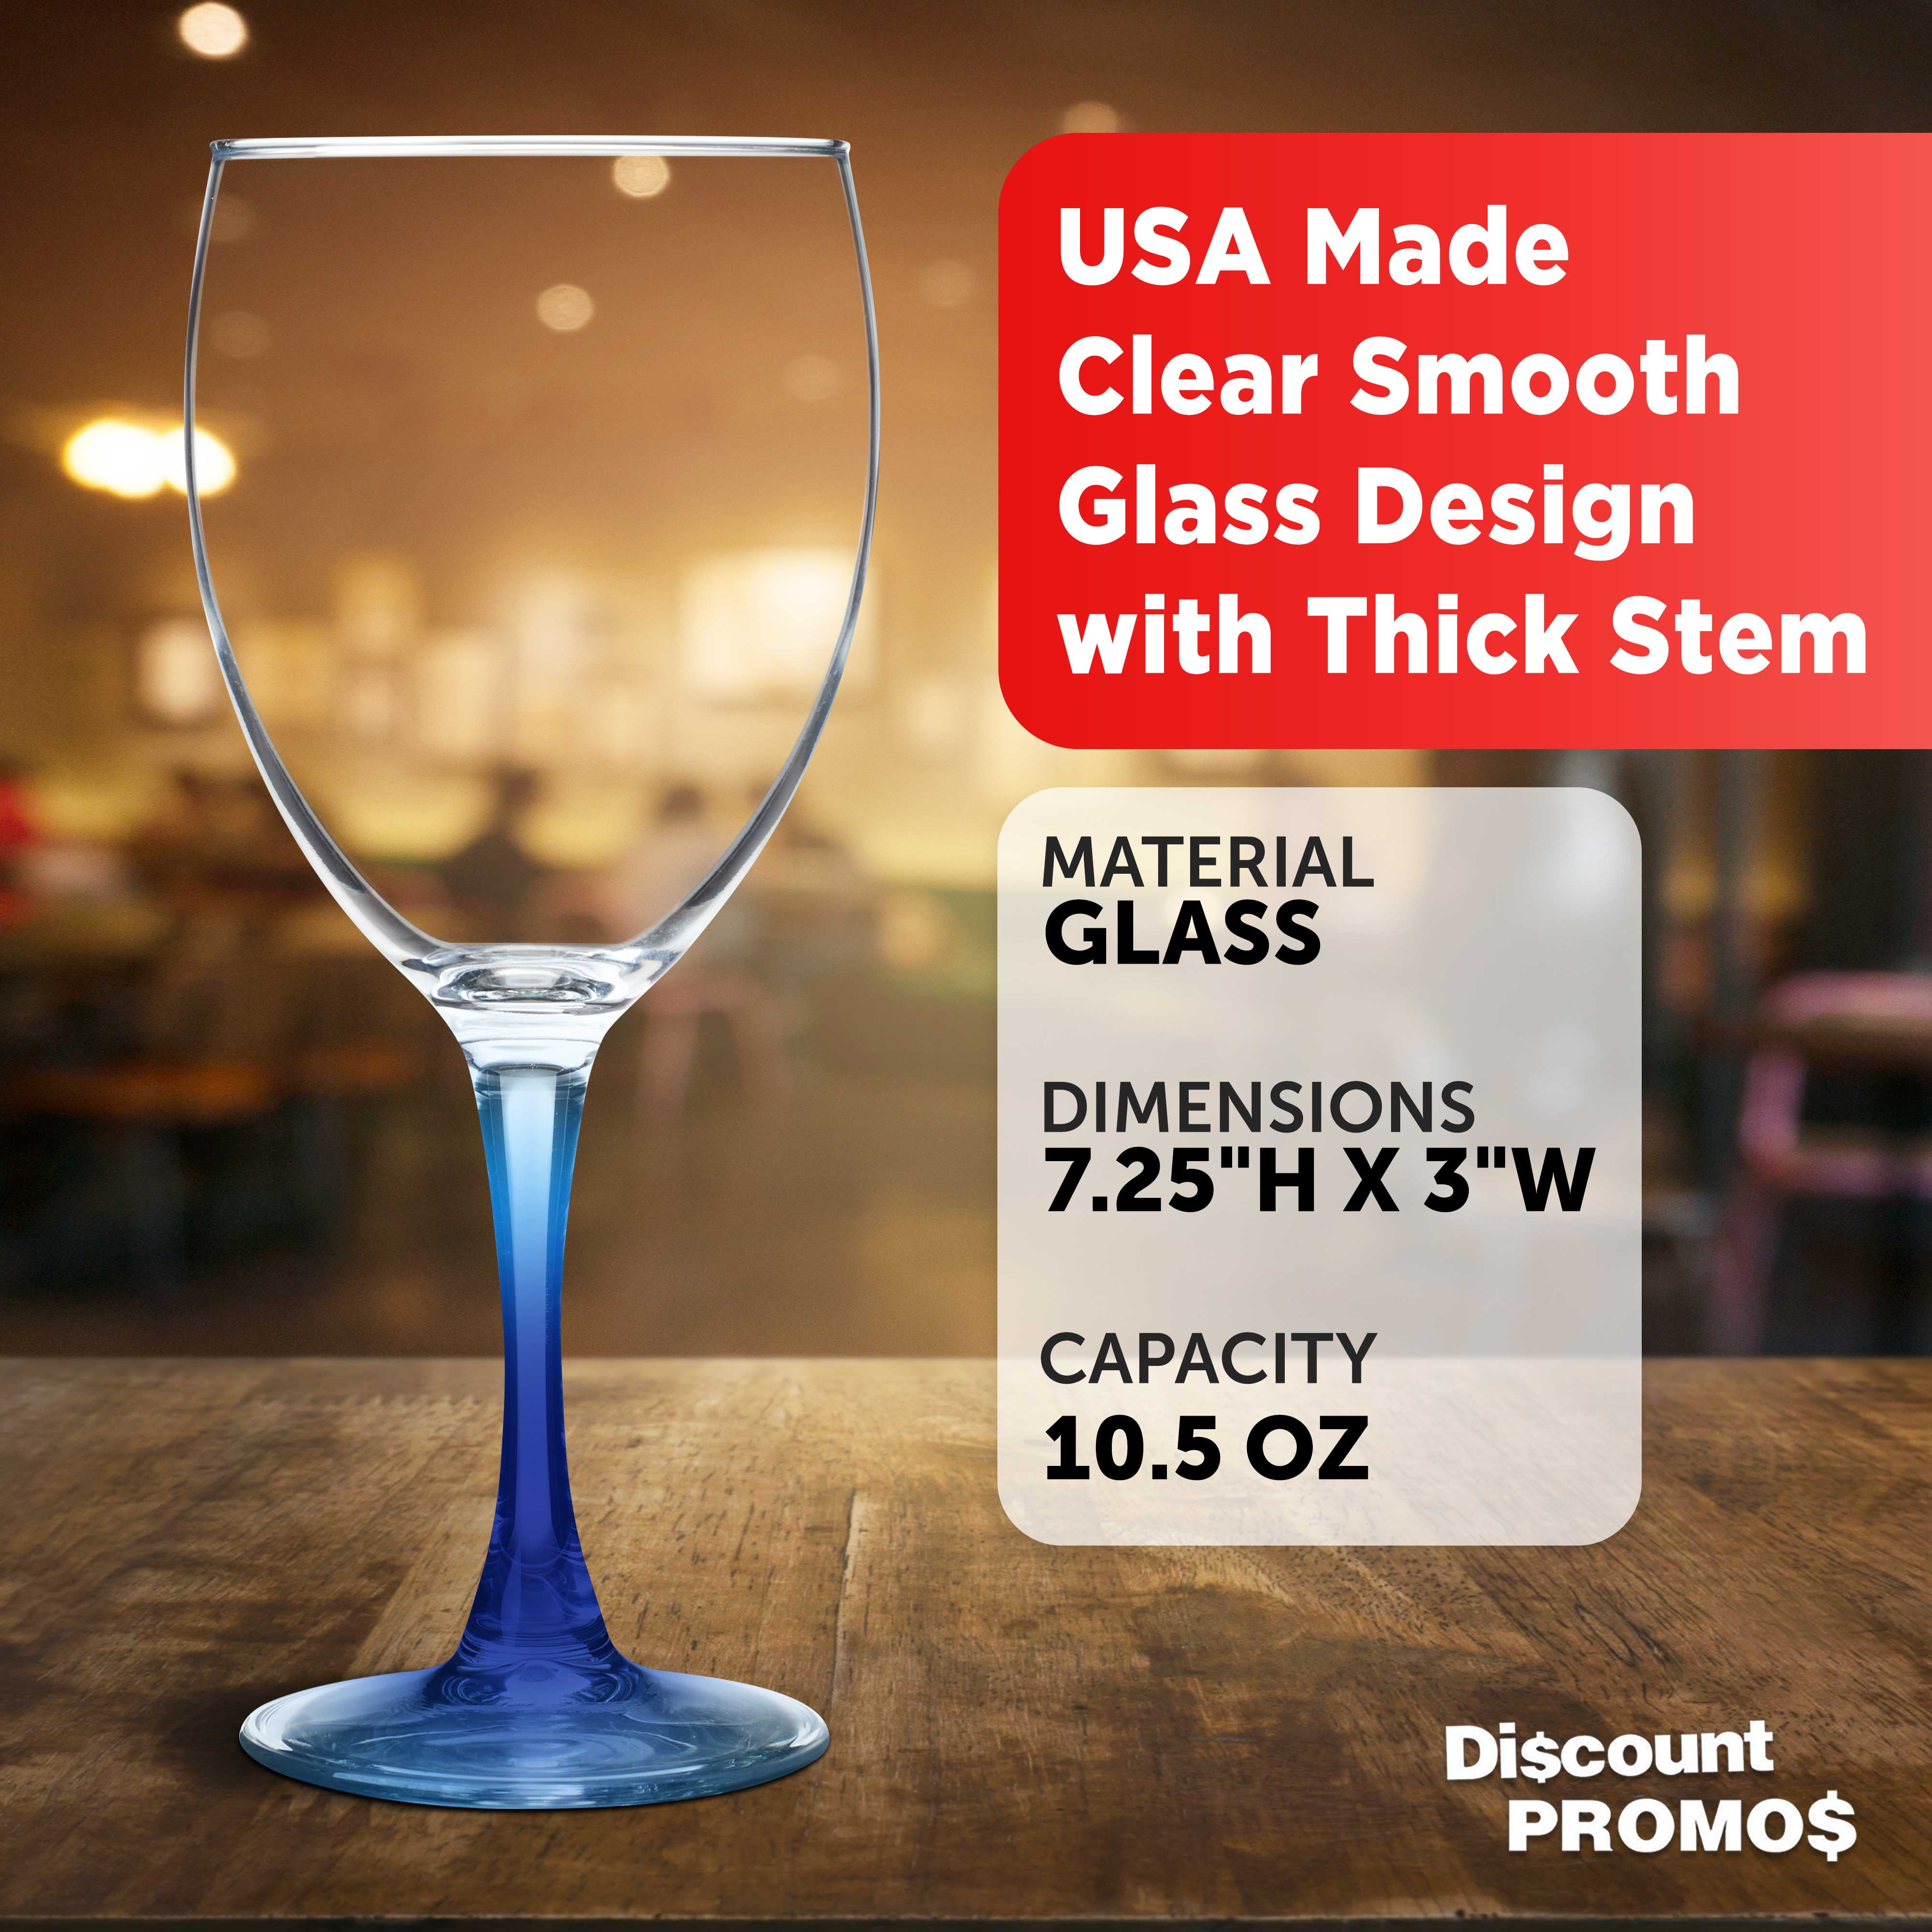 Wine Glasses 17.5 oz. Set of 12, Bulk Pack - Restaurant Glassware, Perfect  for Red Wine or White Wine - Black 